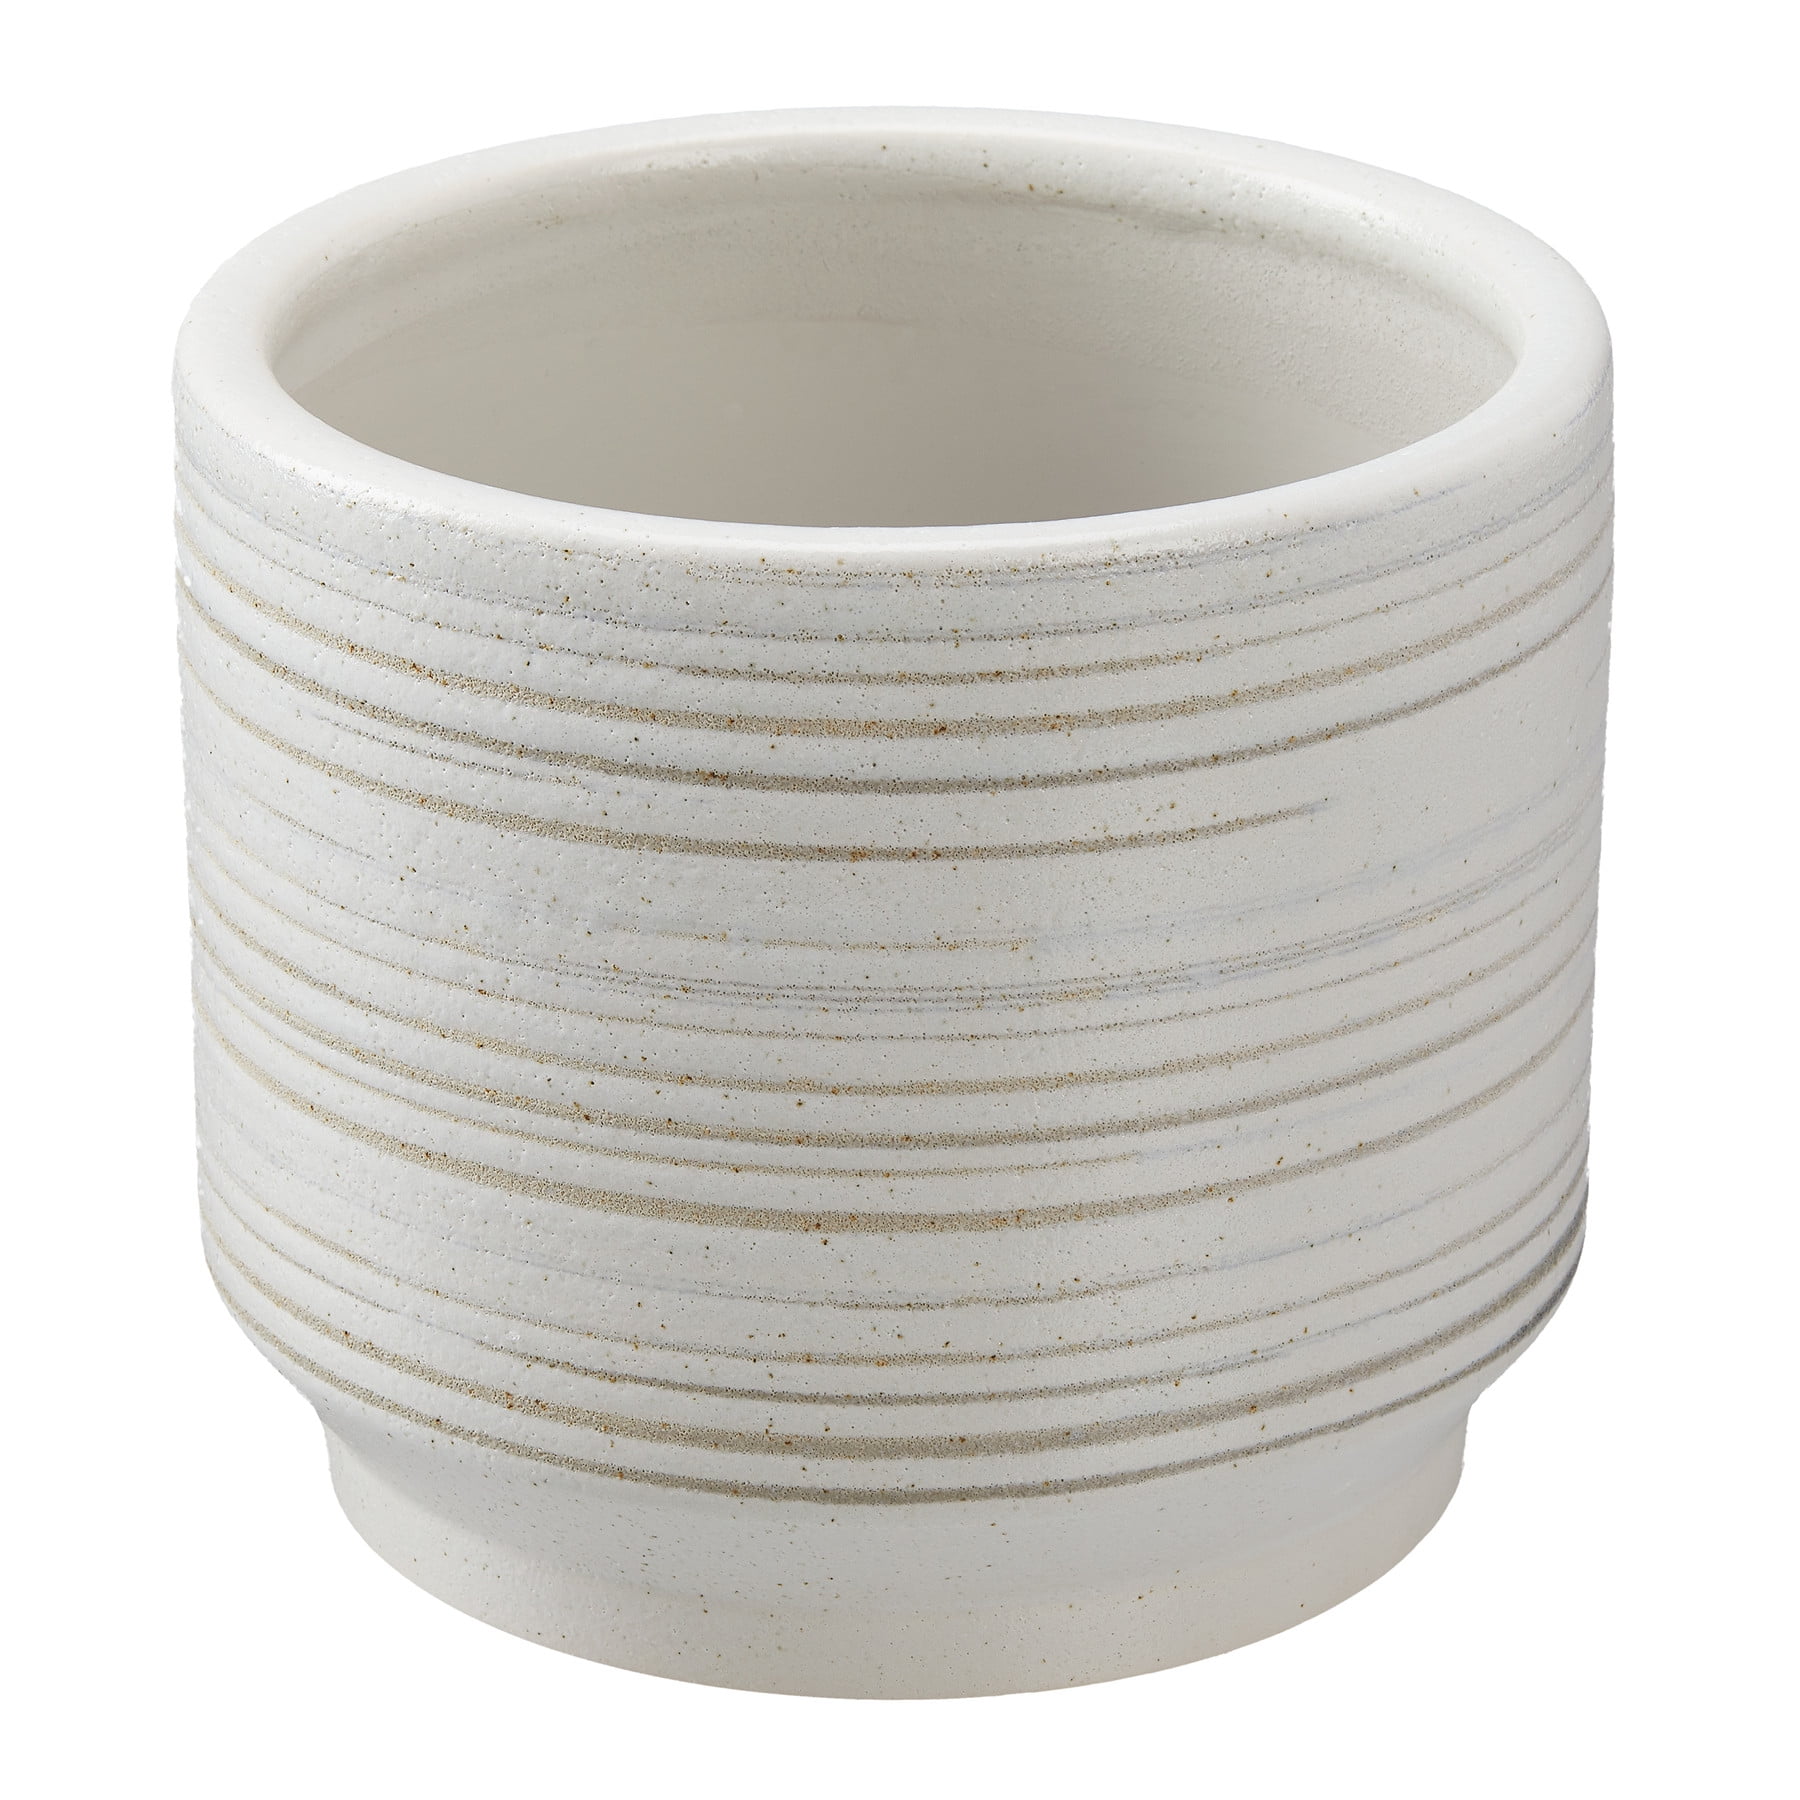 Better Homes & Gardens Pottery 8" Teramo Ceramic Planter, White